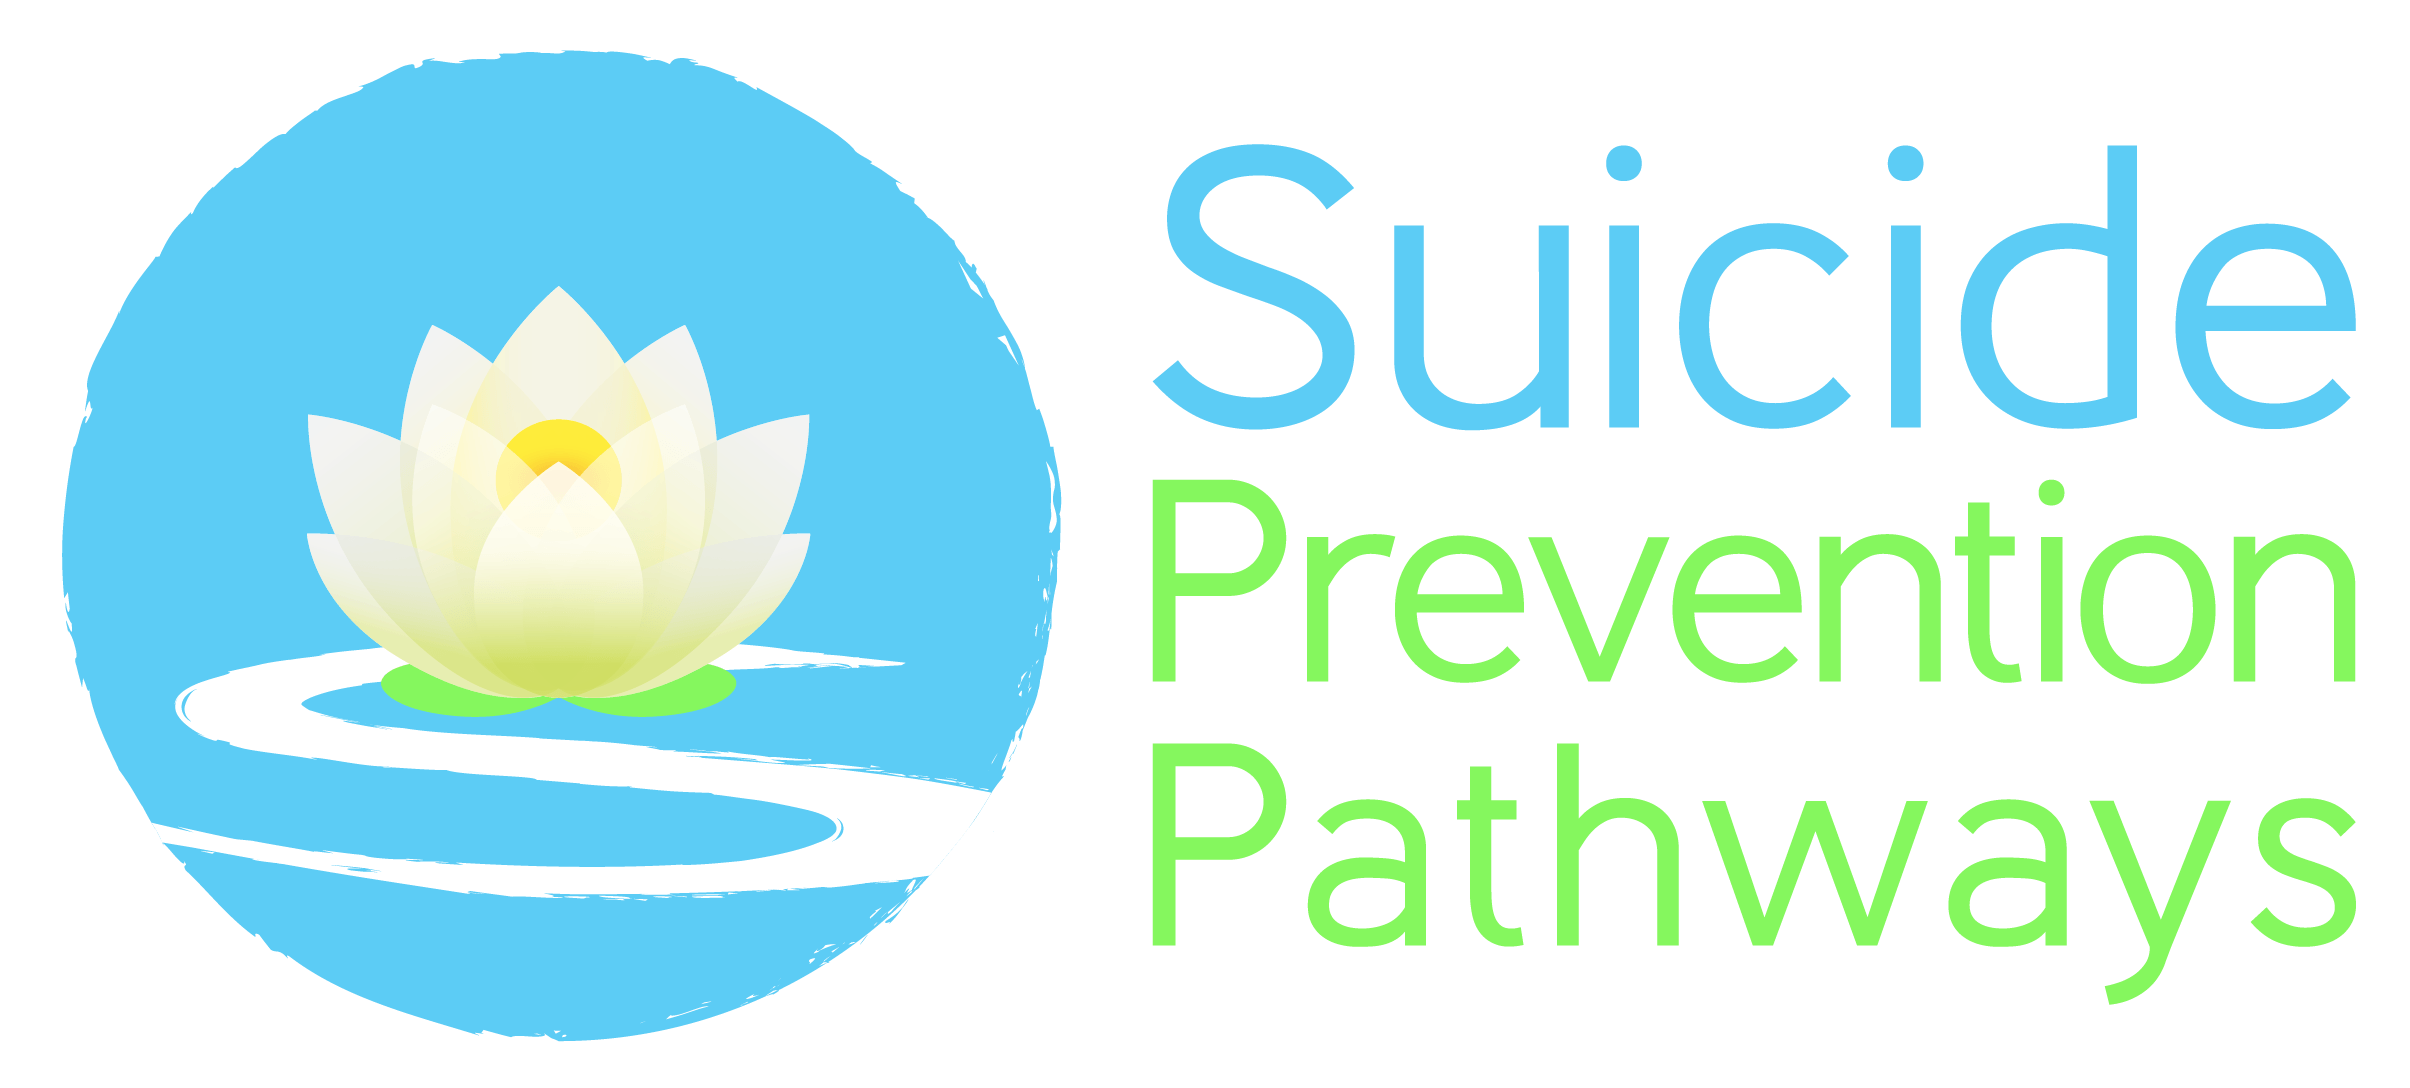 Suicide Prevention Pathways